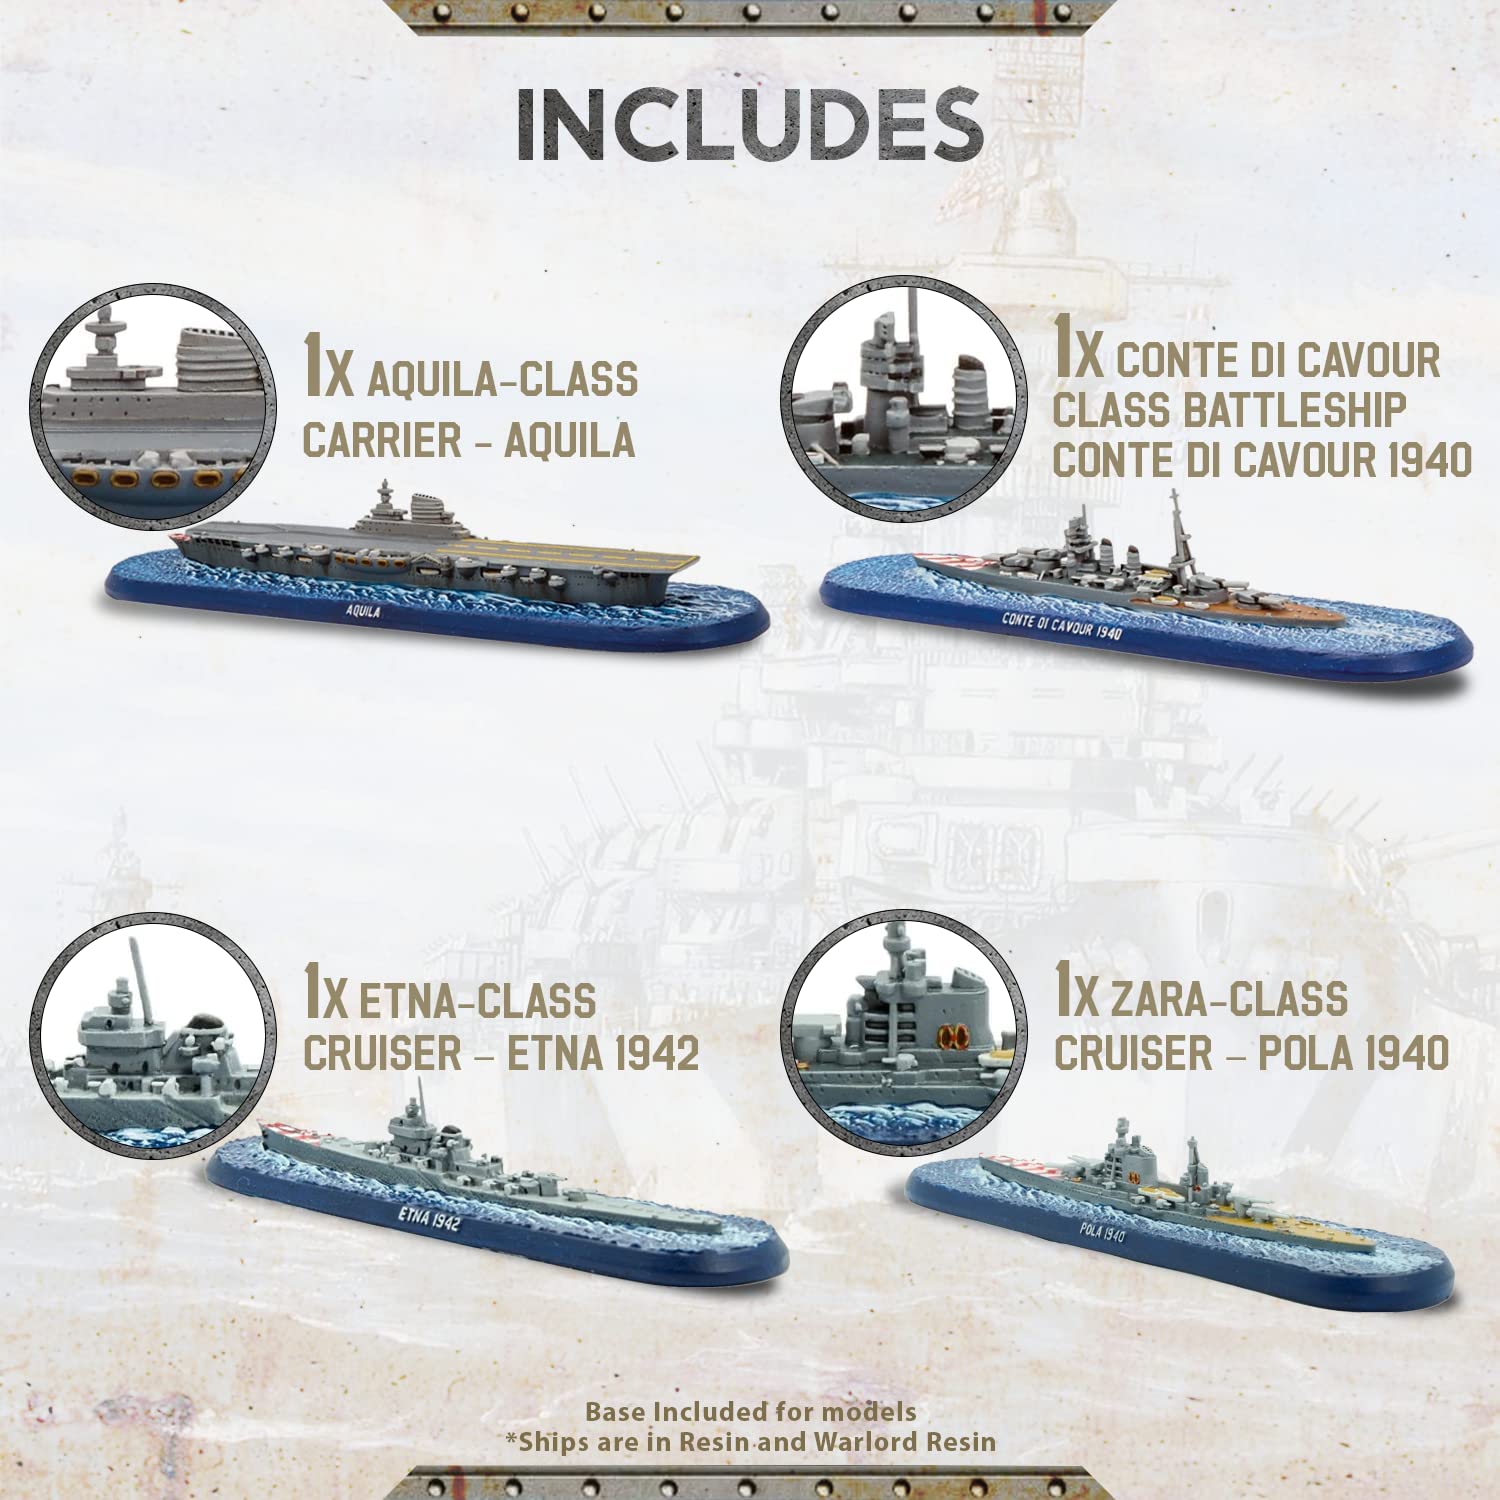 Victory at Sea - Regia Marina: Regia Marina Fleet